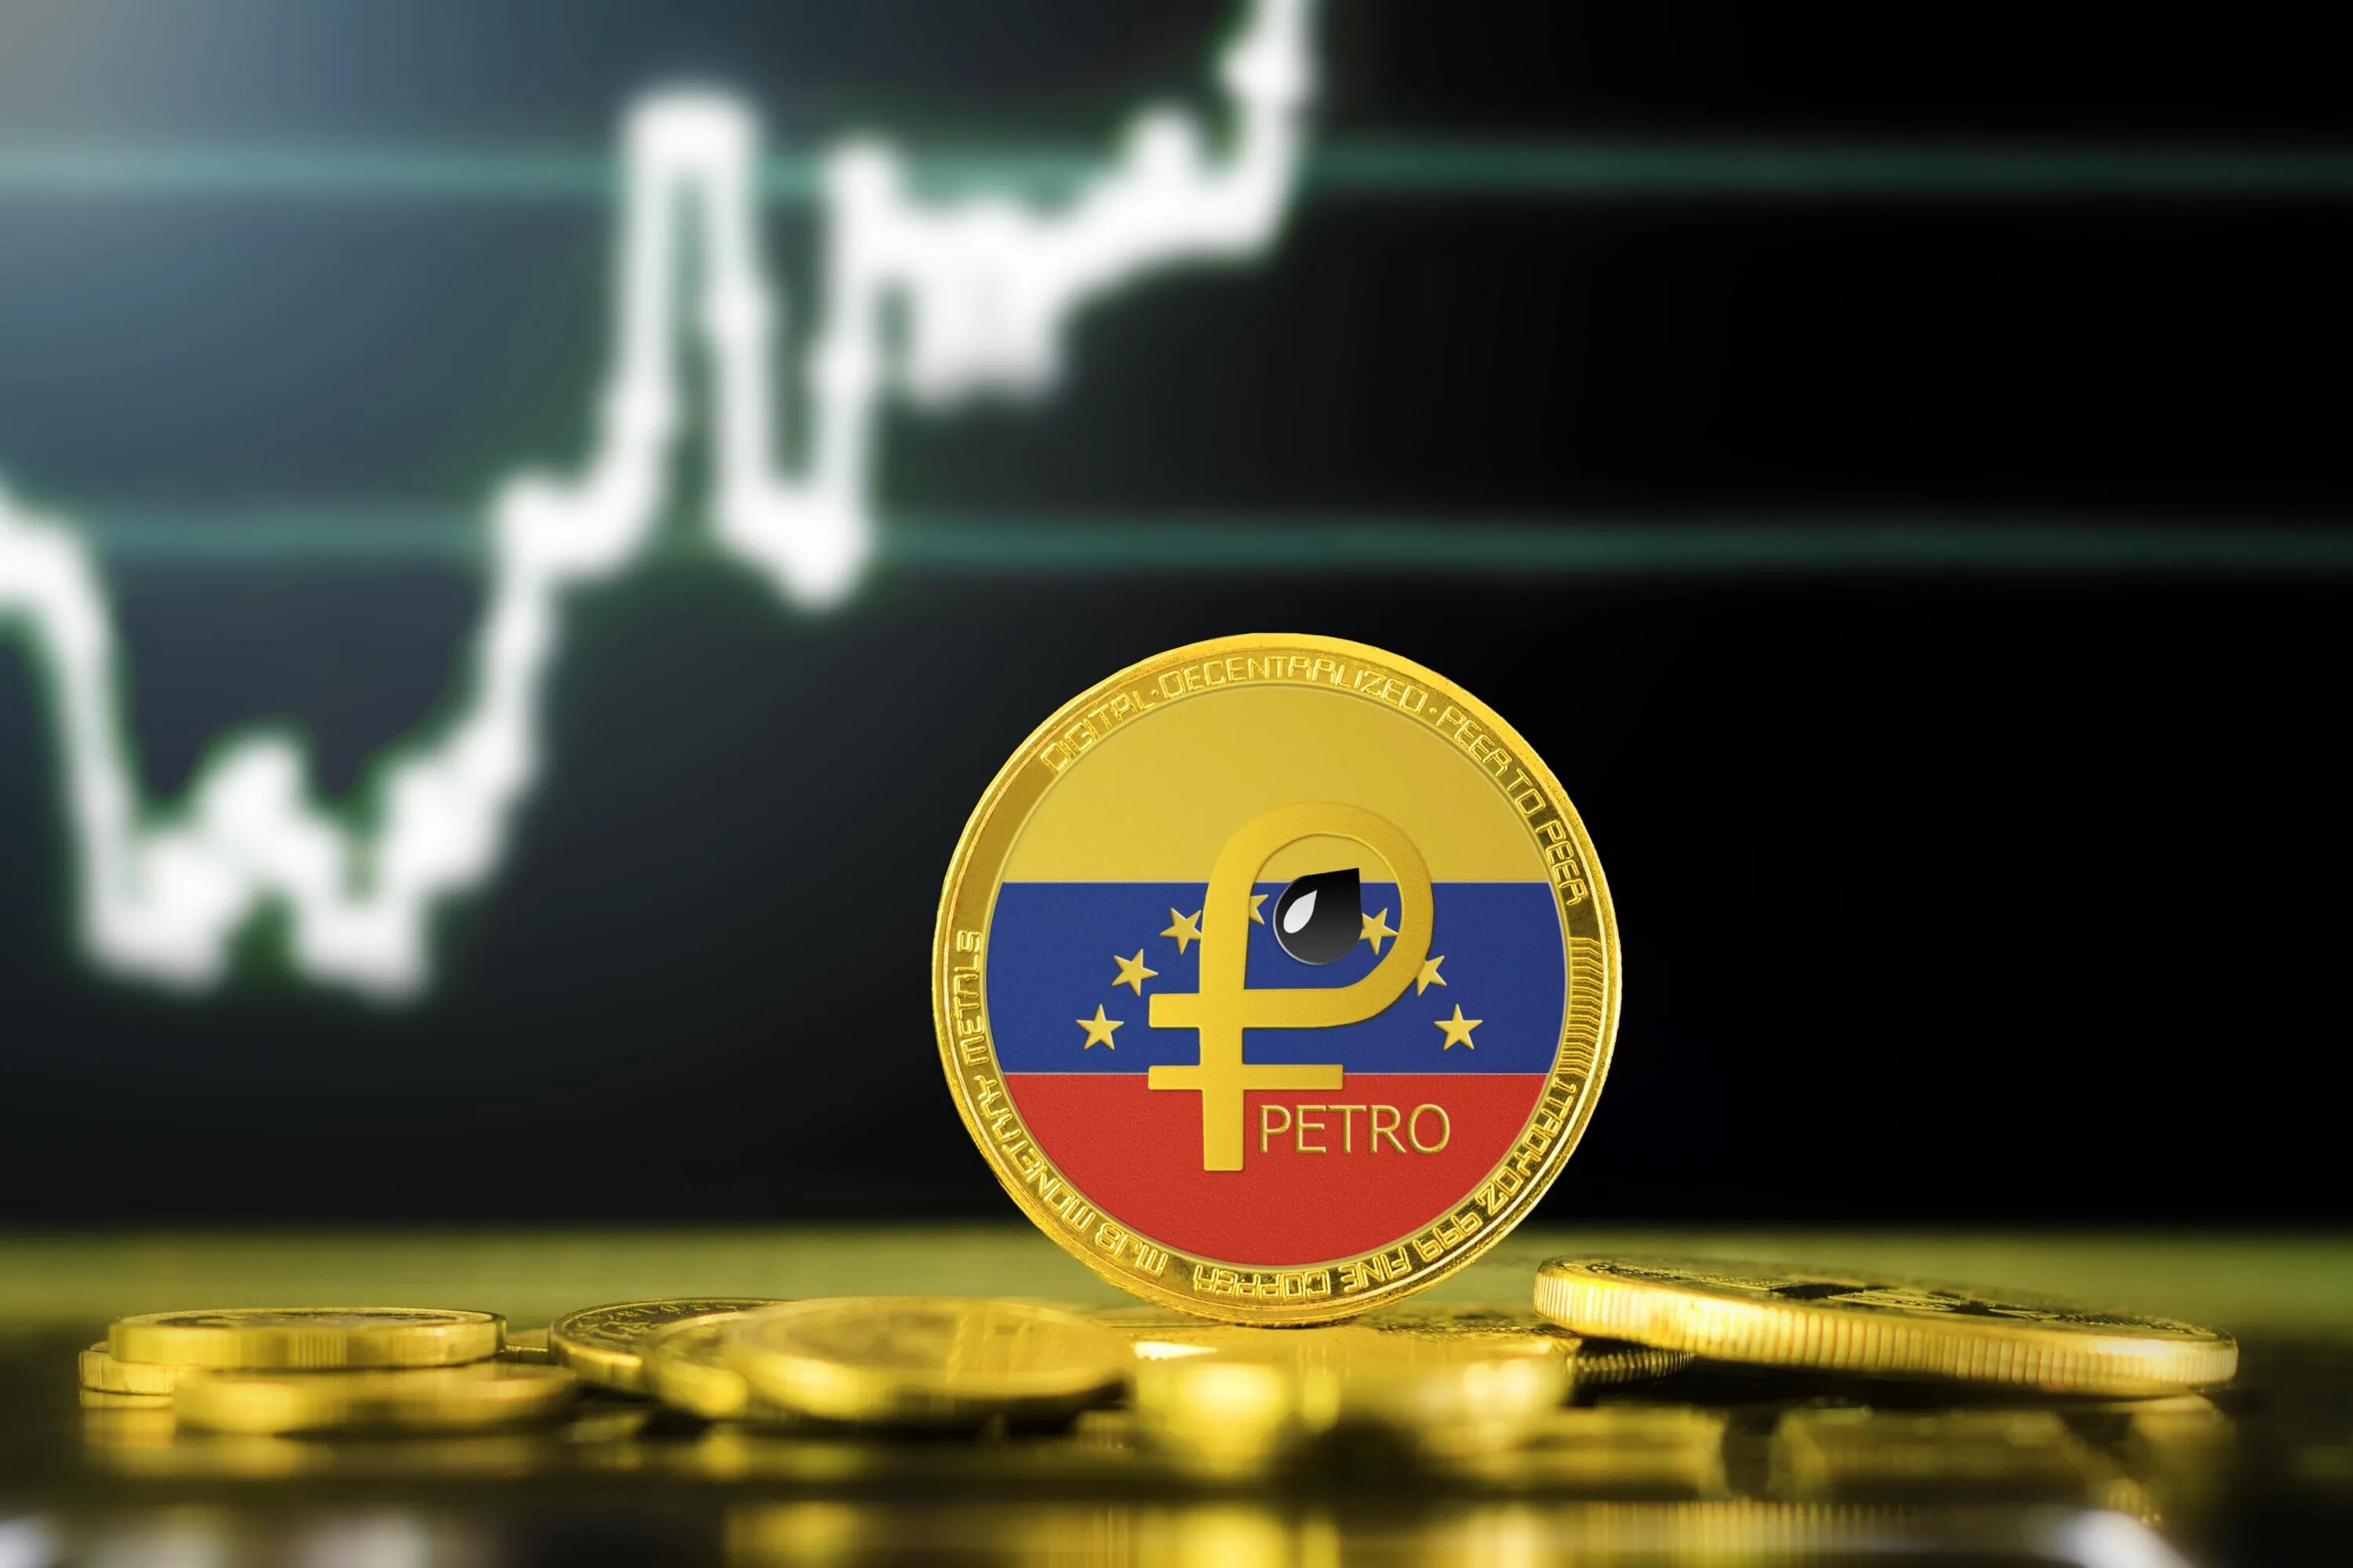 El Petro криптовалюта. Венесуэла криптовалюта. Венесуэльская Петро. Новая криптовалюта в Венесуэле. Цифровая национальная валюта